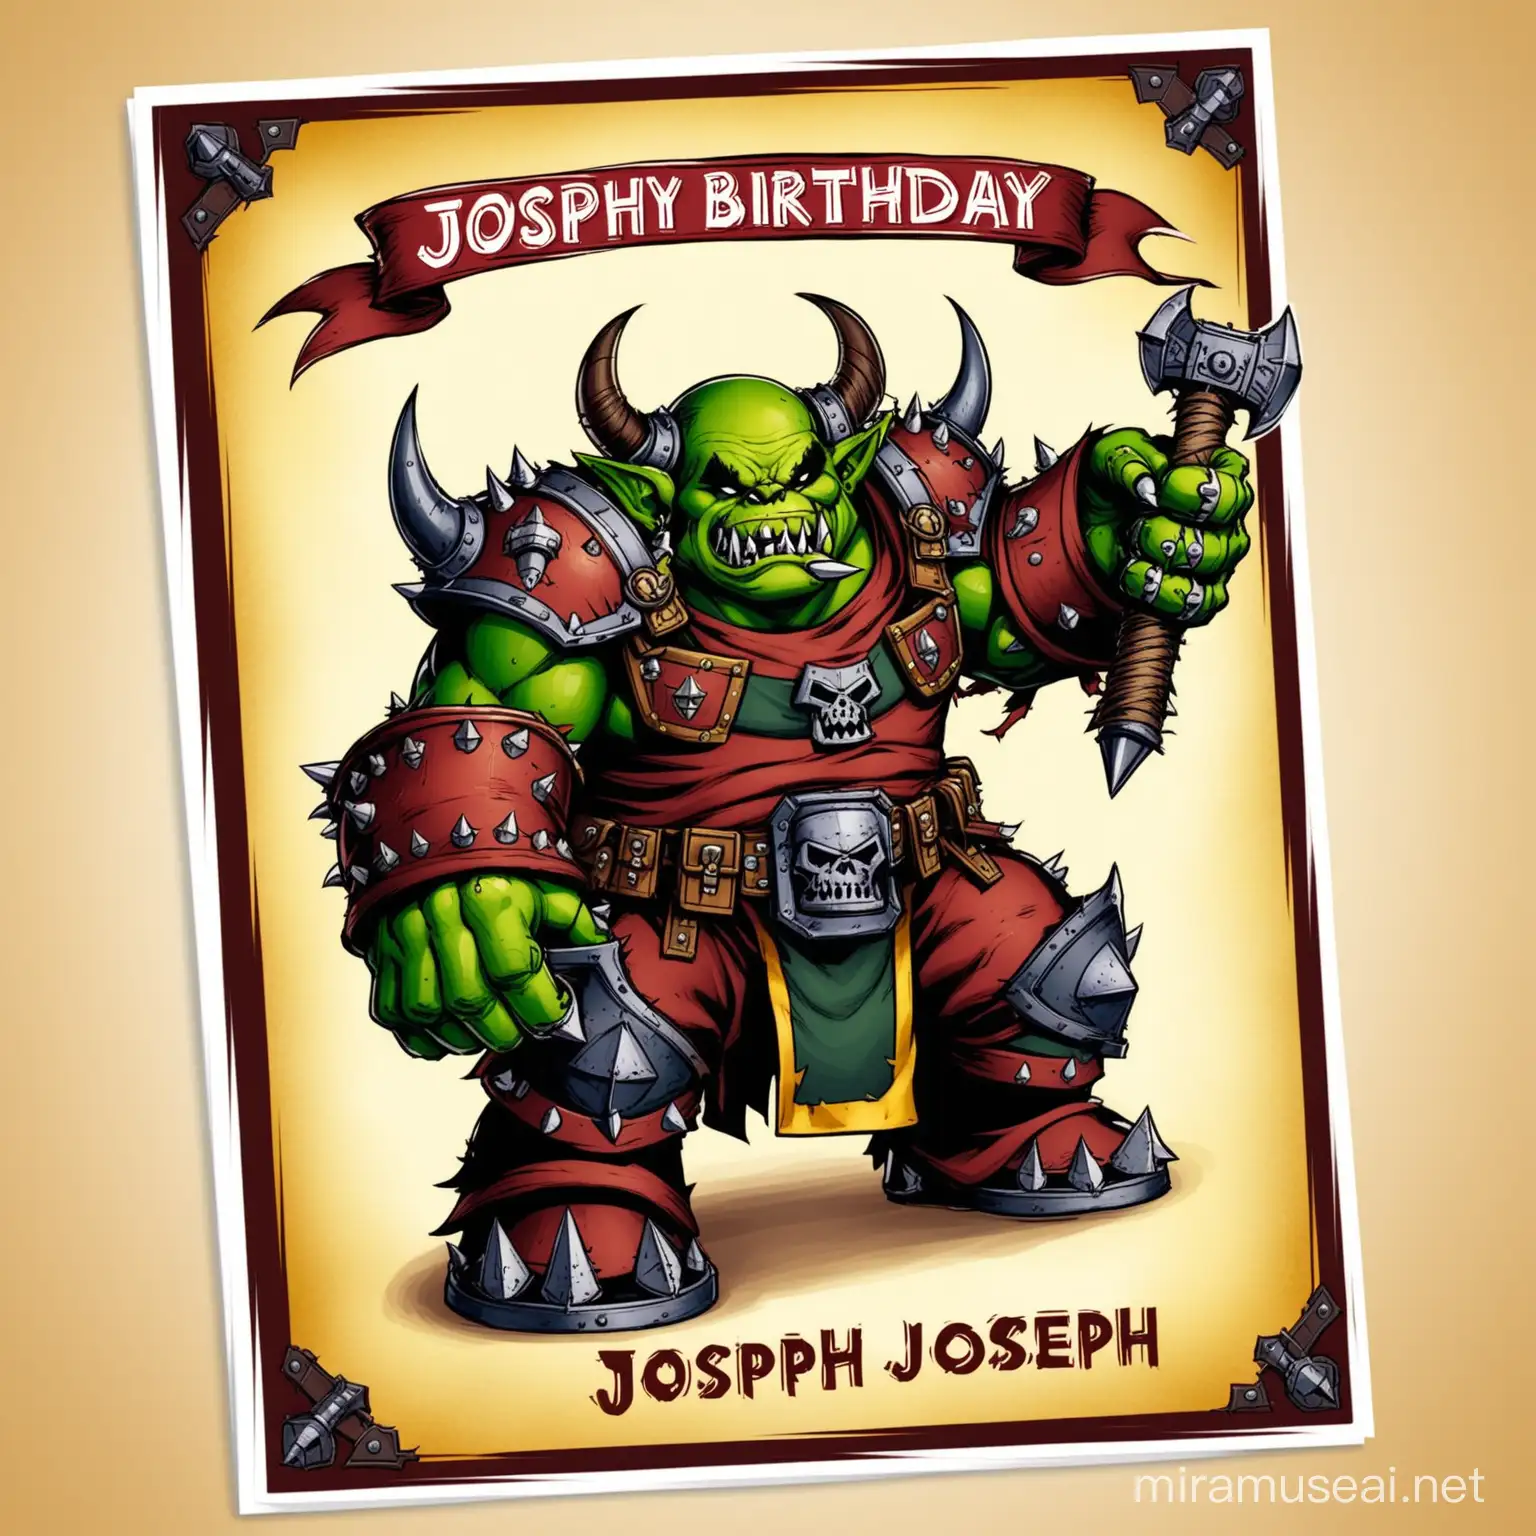 Warhammer ork birthday card for person named joseph